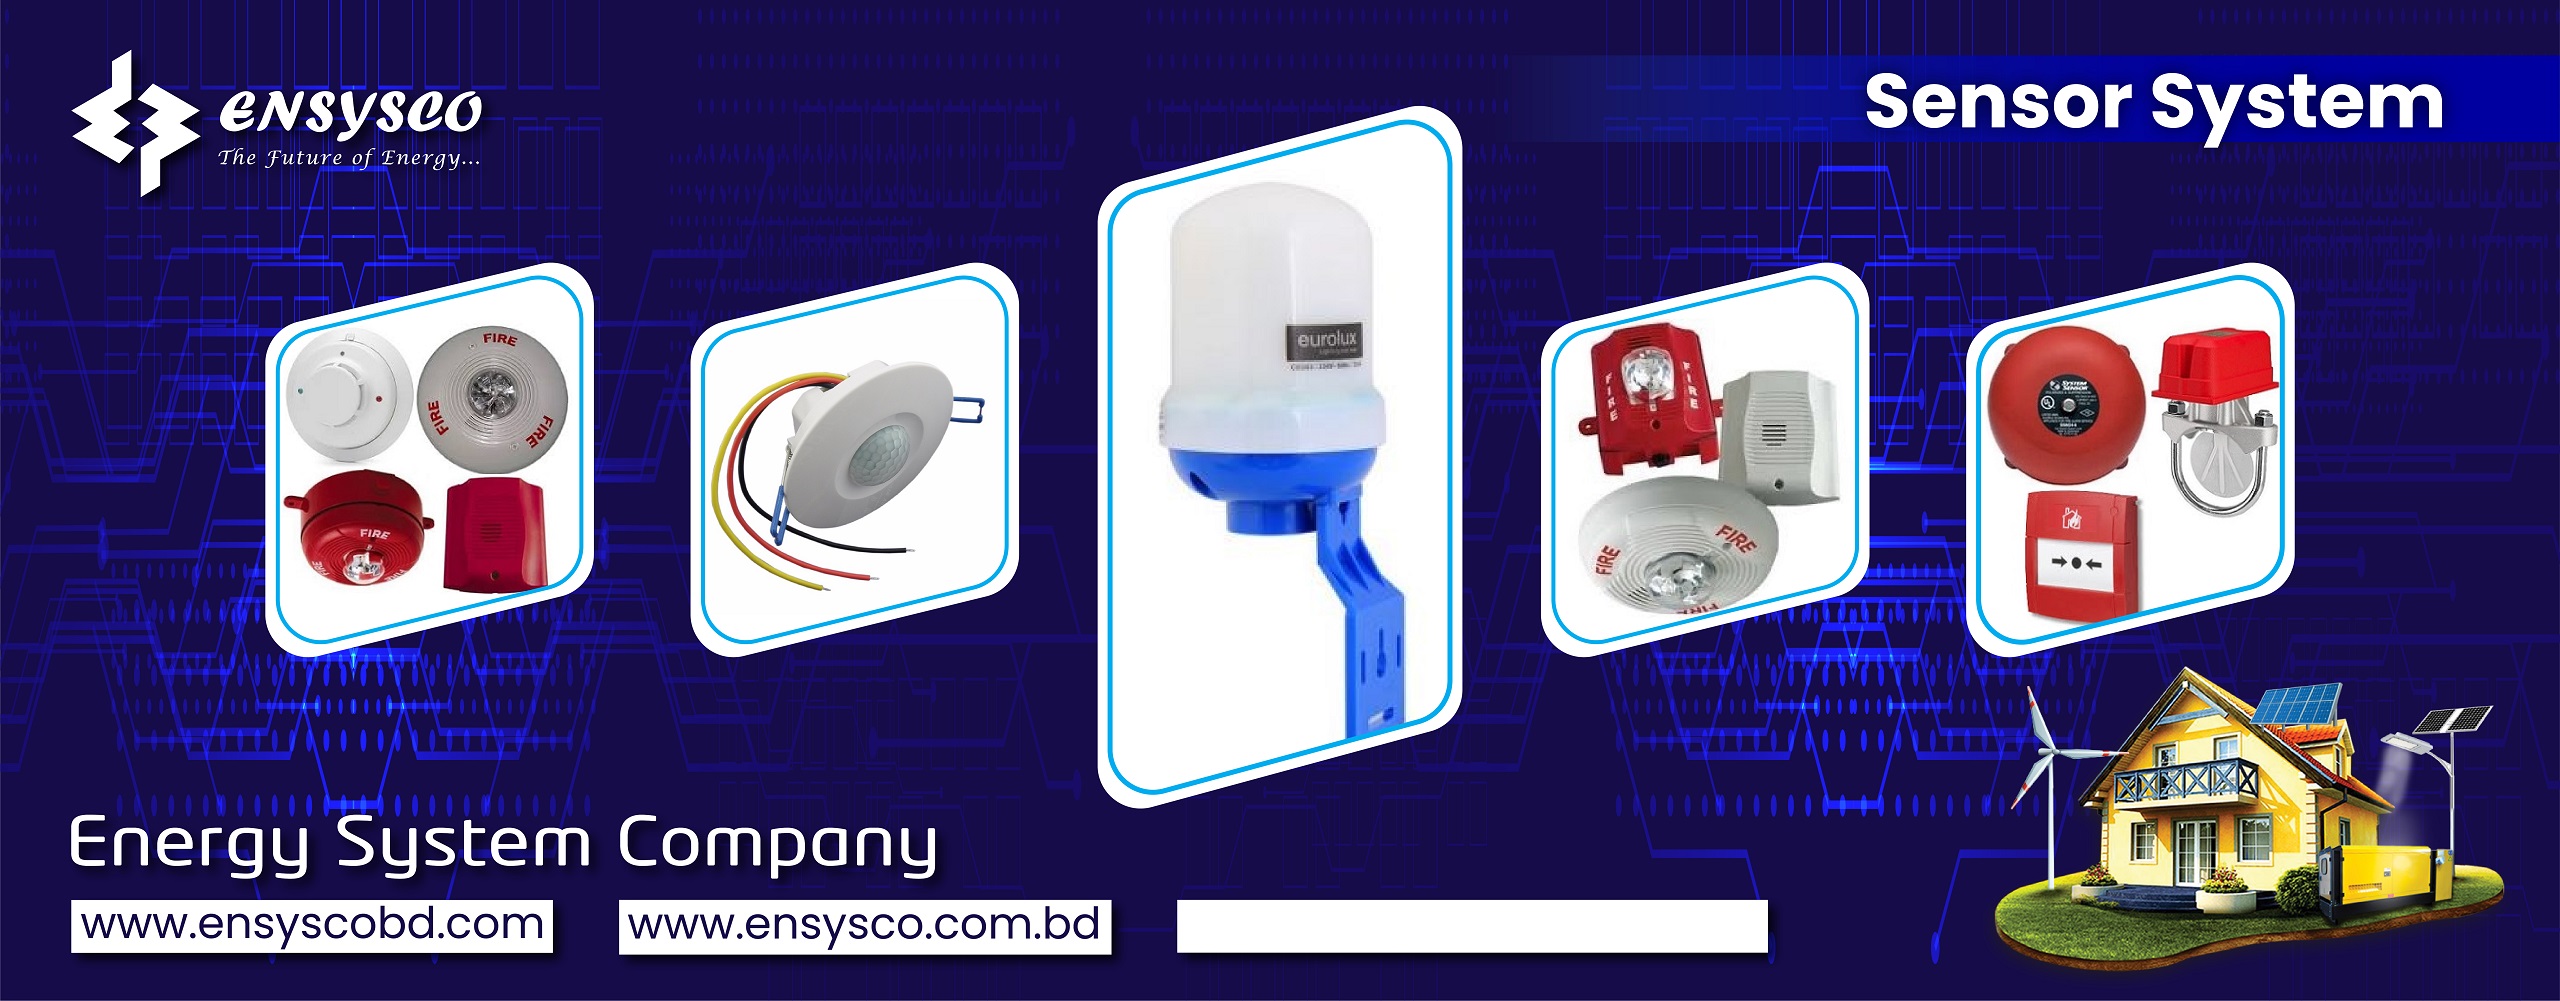 Sensor System Price in Bangladesh